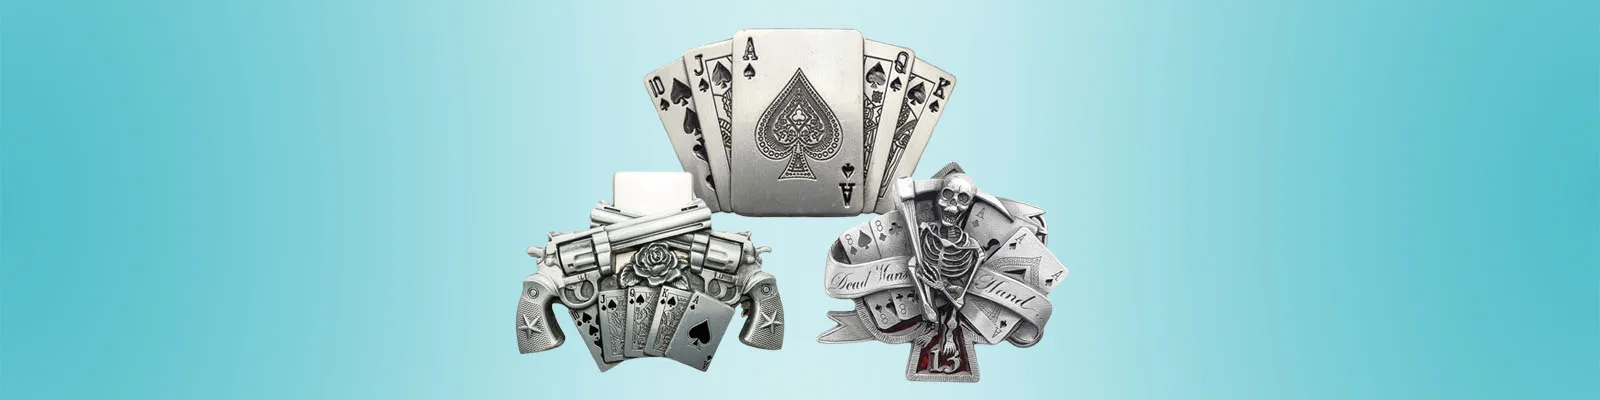 Glücksspiel & Poker Gürtelschnallen Kategoriebild | Buckle.de